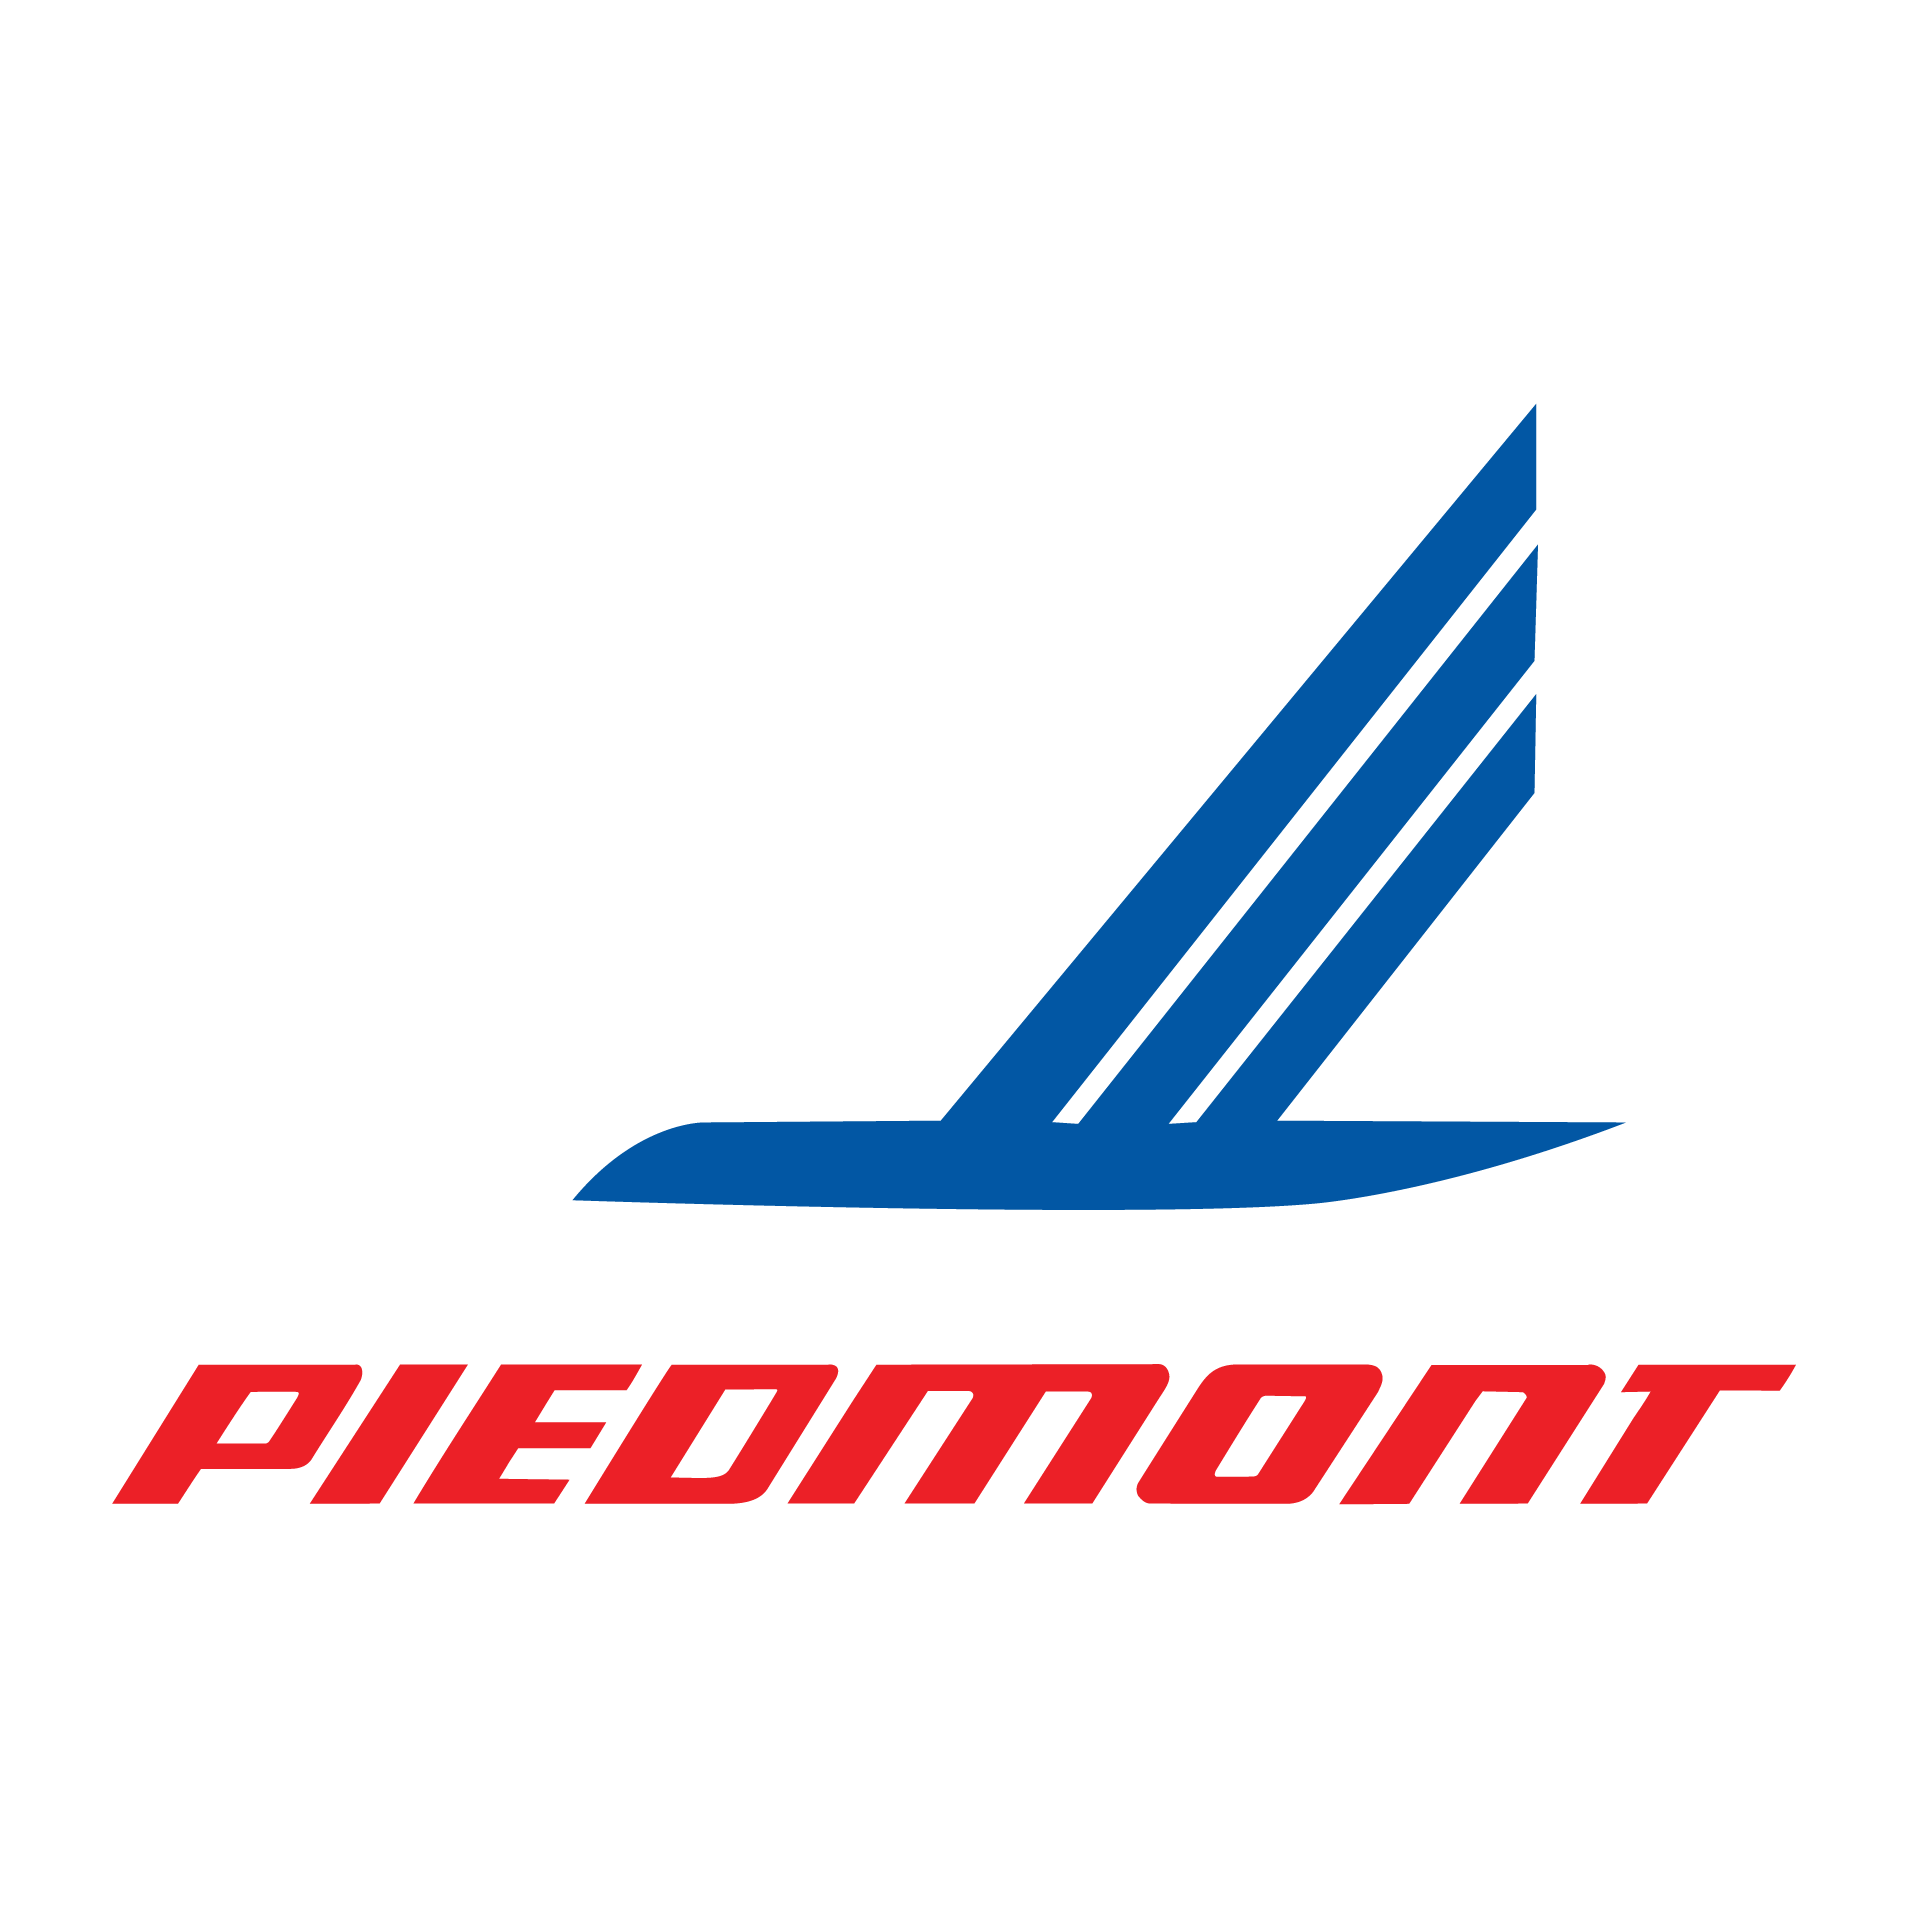 Piedmont Airlines, Inc. logo